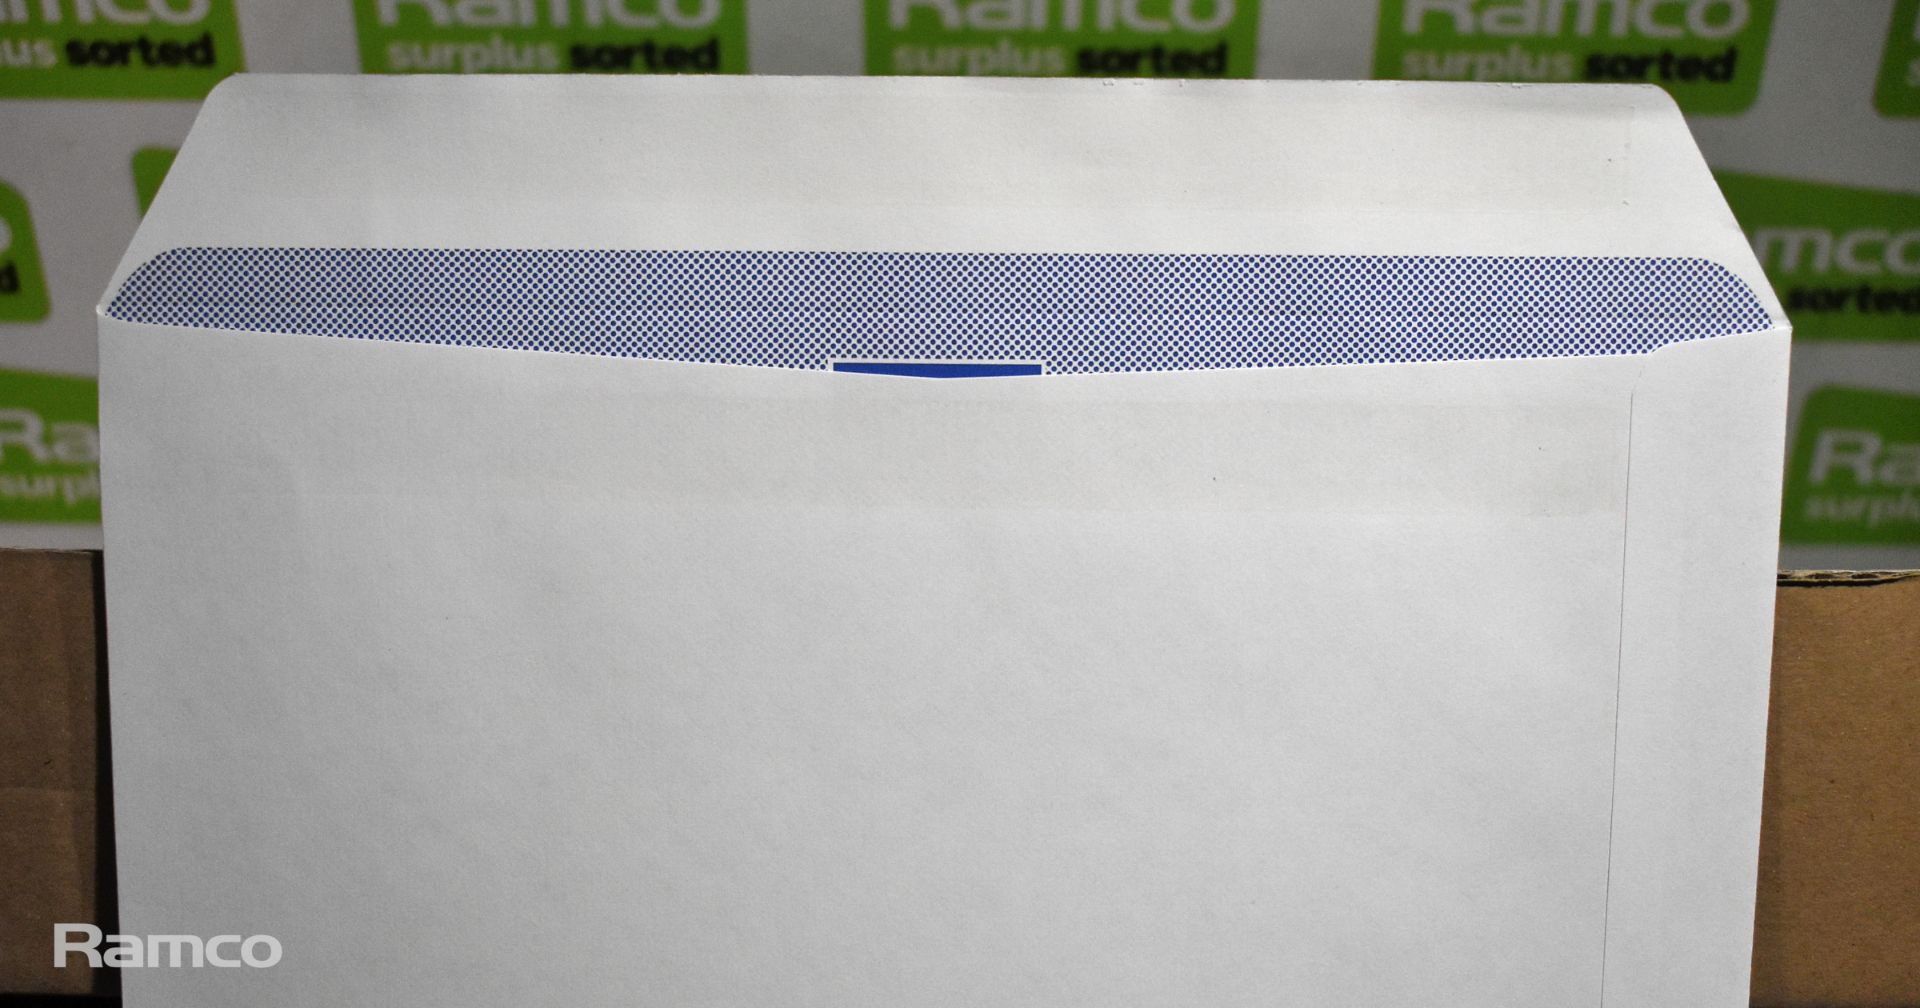 20x boxes of White Lyreco B4 pocket envelopes - 353 x 250mm 100 gsm - 250 envelopes per box - Image 4 of 5